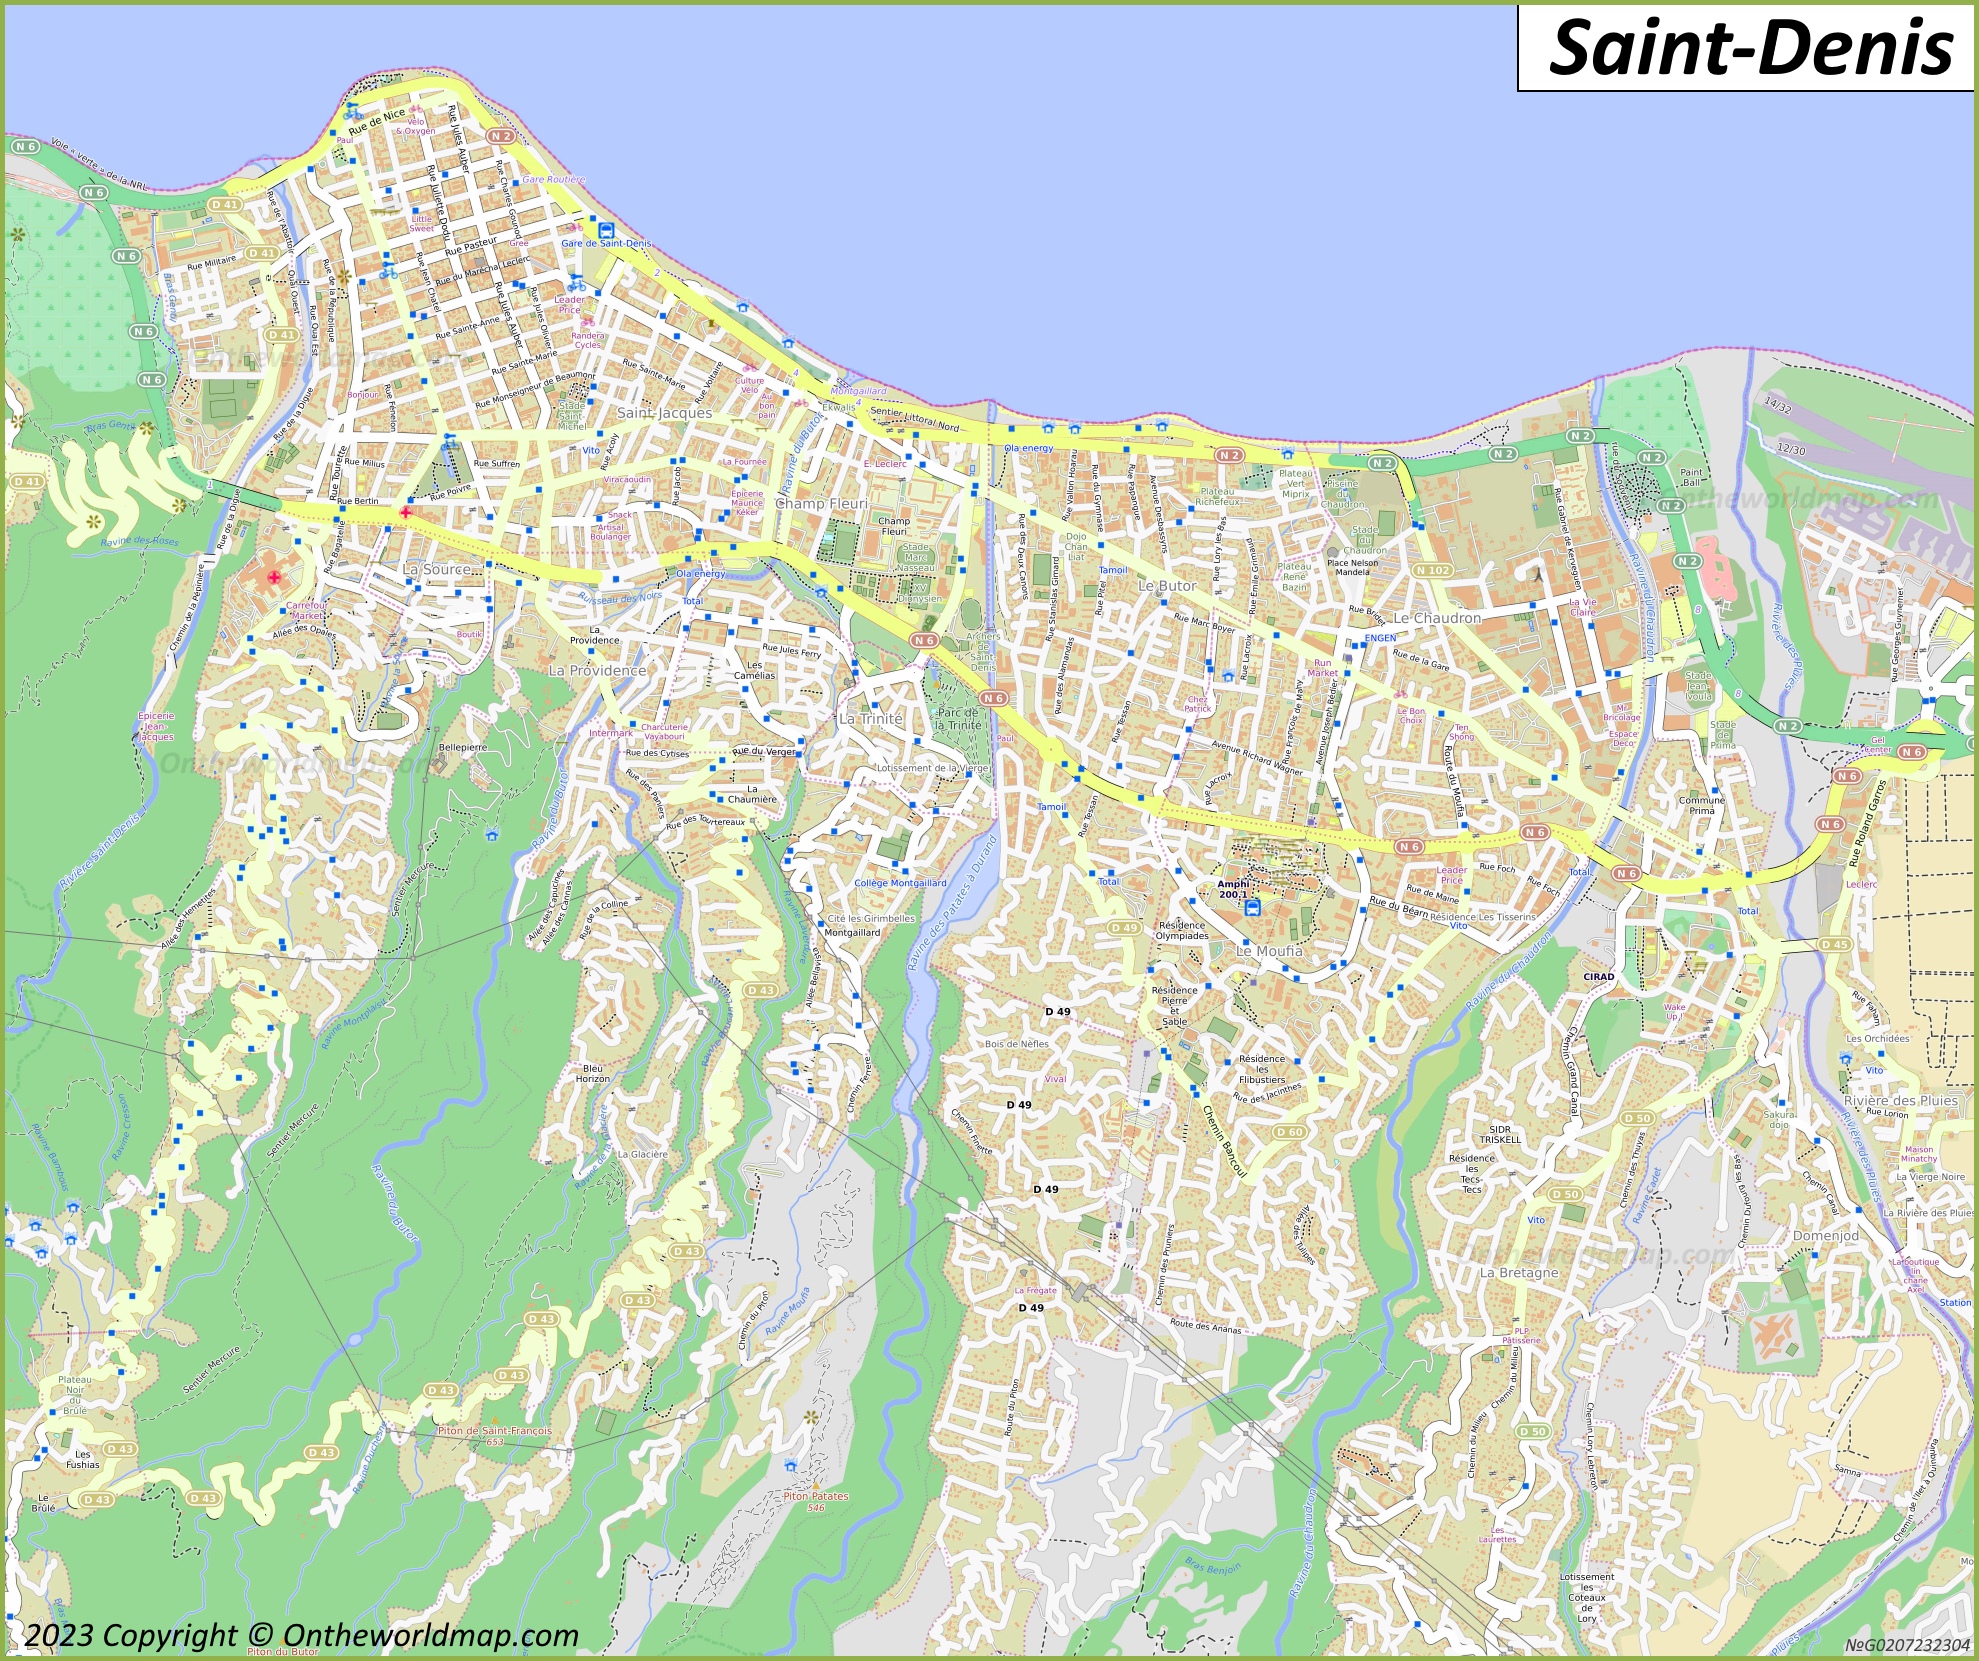 Detailed Map of Saint-Denis